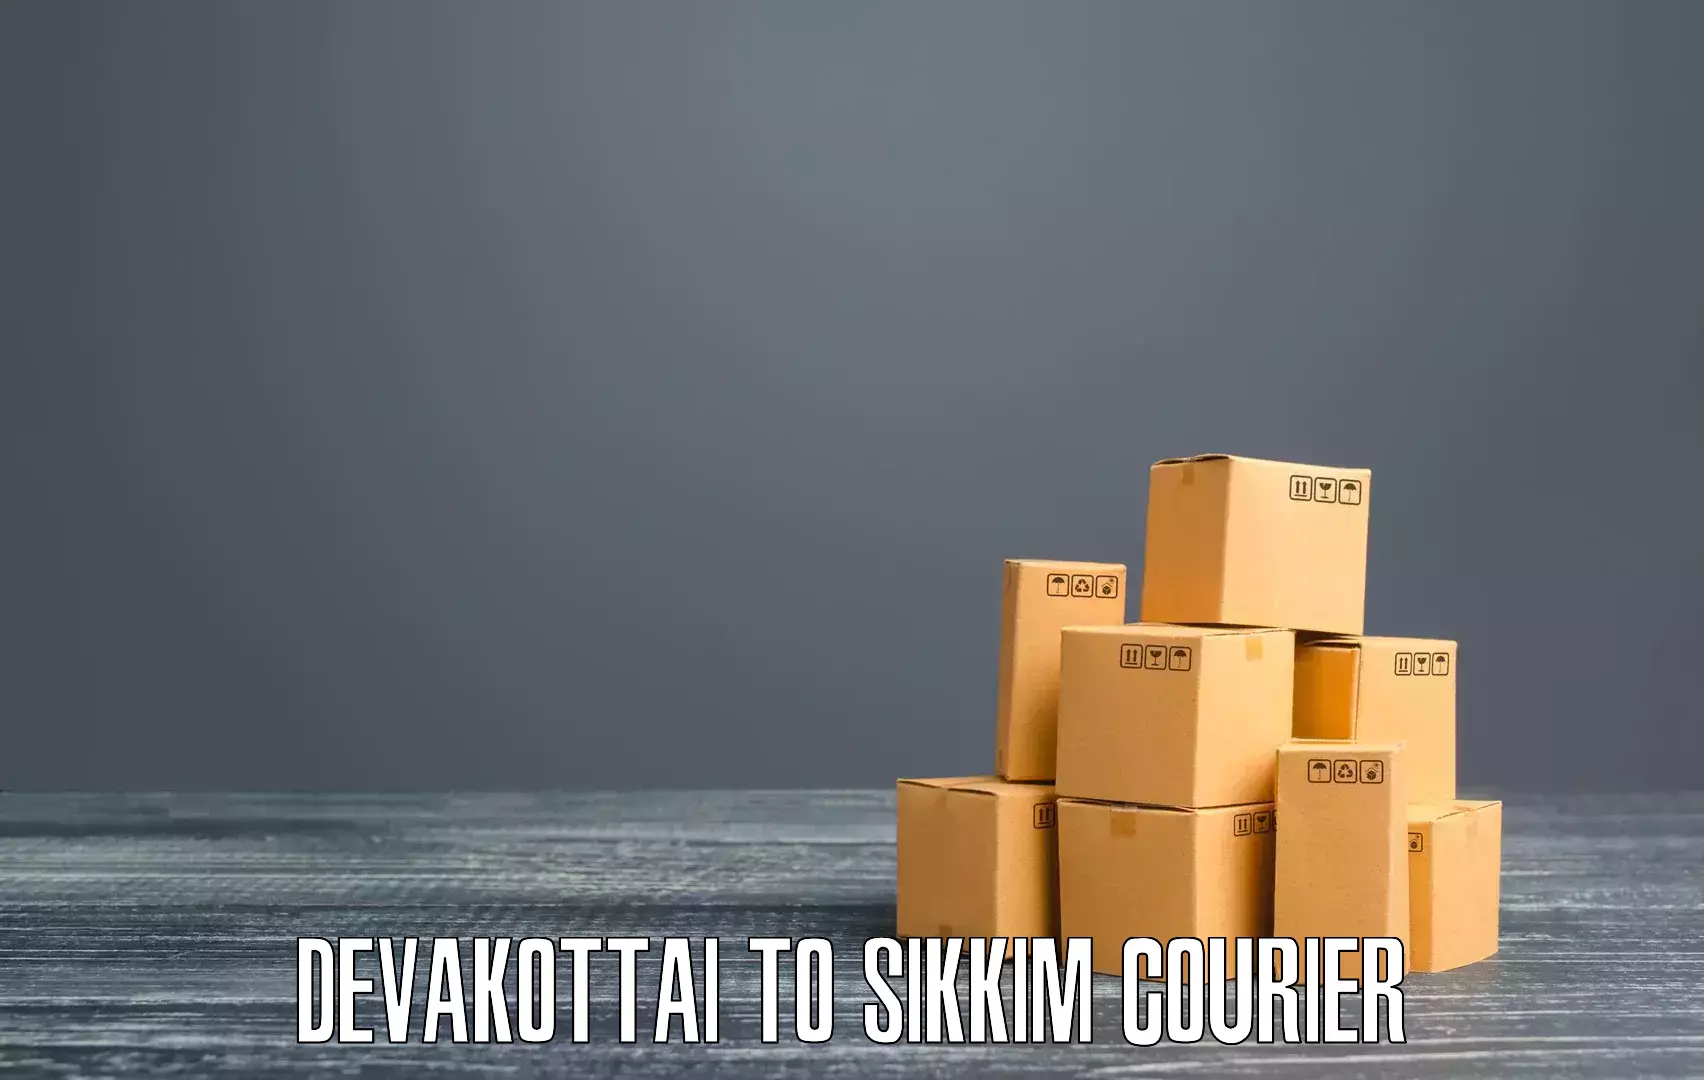 User-friendly courier app Devakottai to South Sikkim